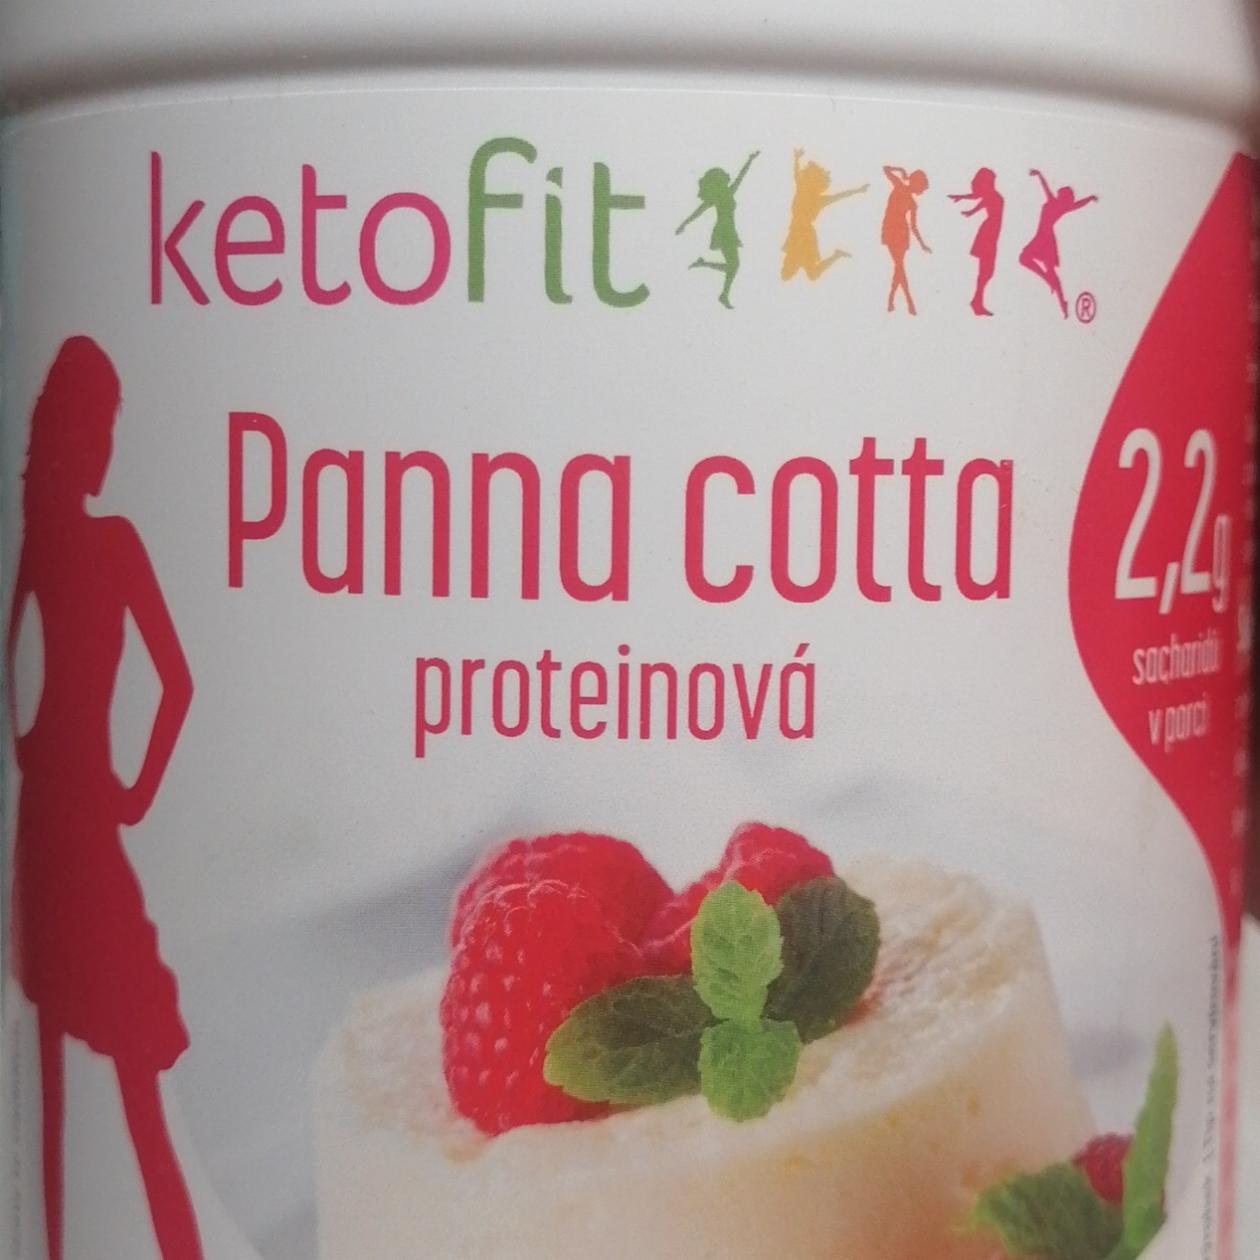 Fotografie - Panna cotta proteinová KetoFit